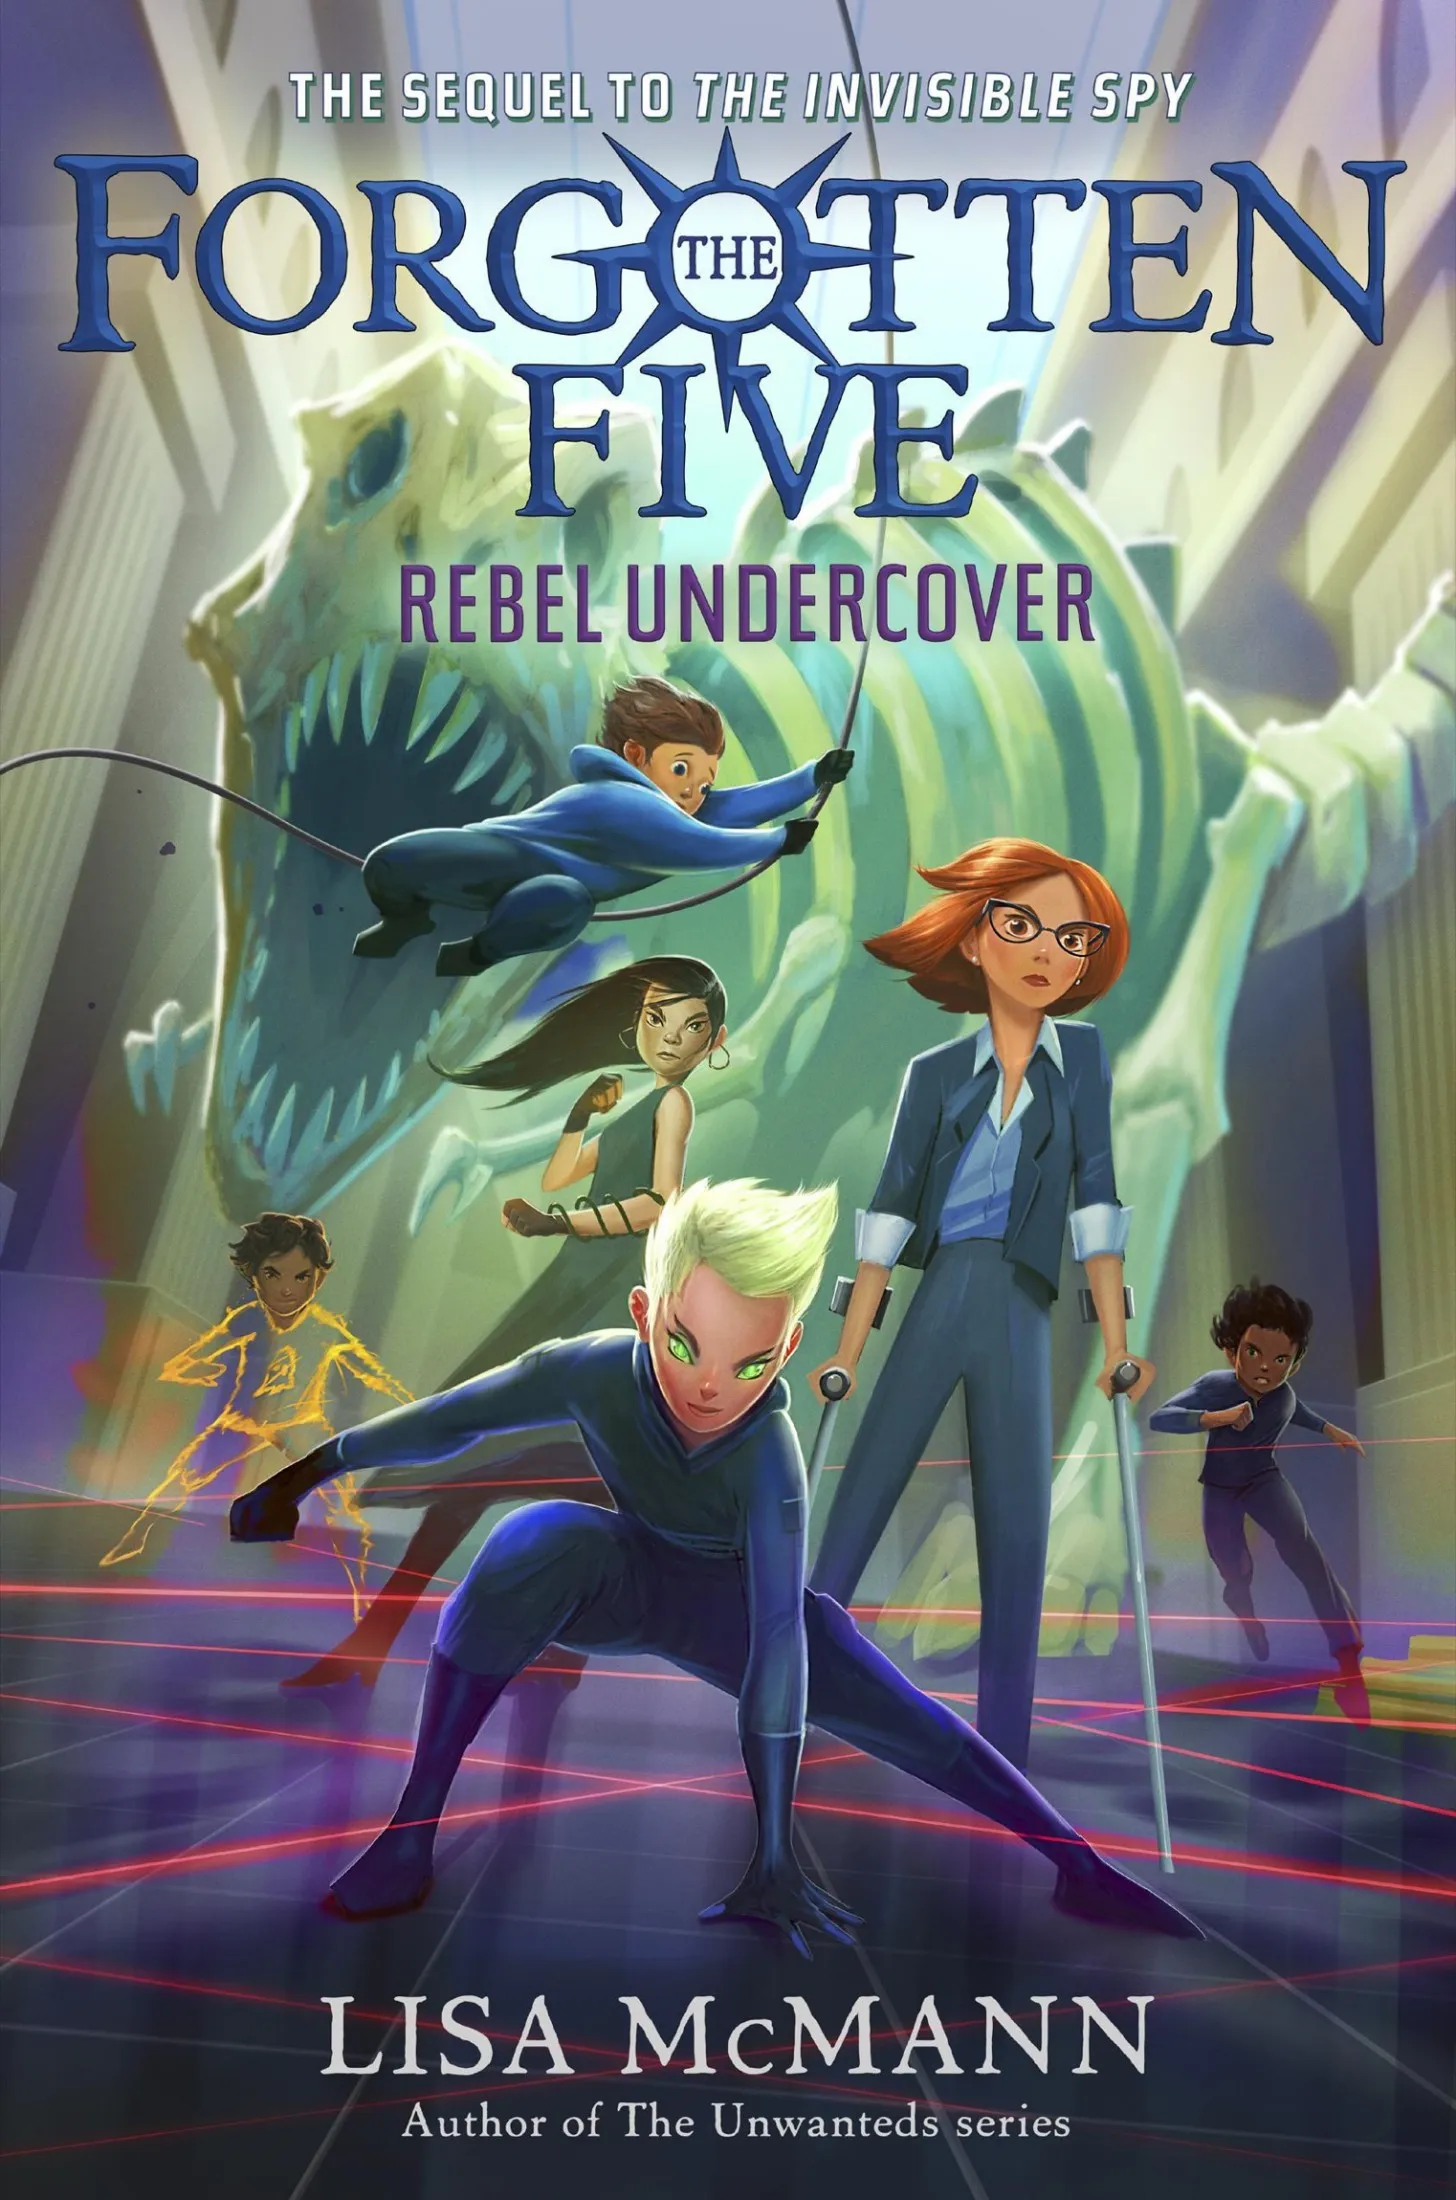 Rebel Undercover (The Forgotten Five #3)